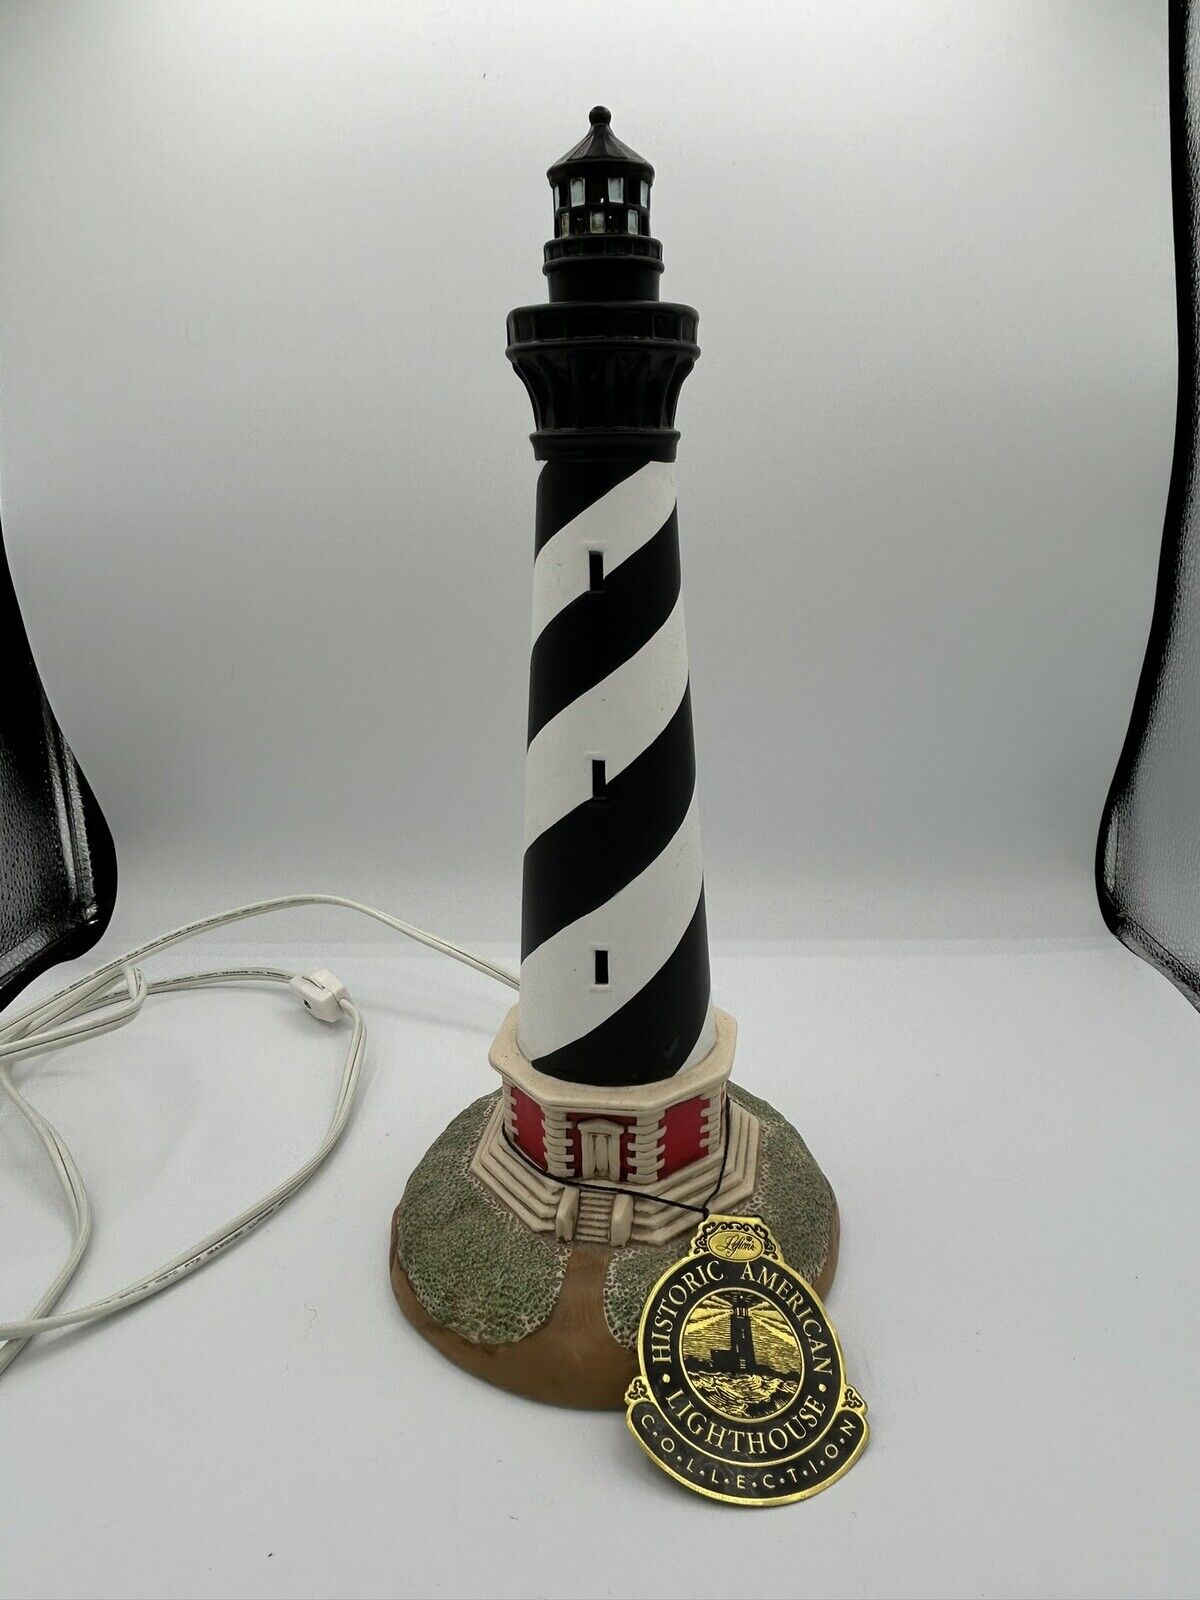 1991 VTG Lefton Historic American Lighthouse Lighted Cape Hatteras NC 1870